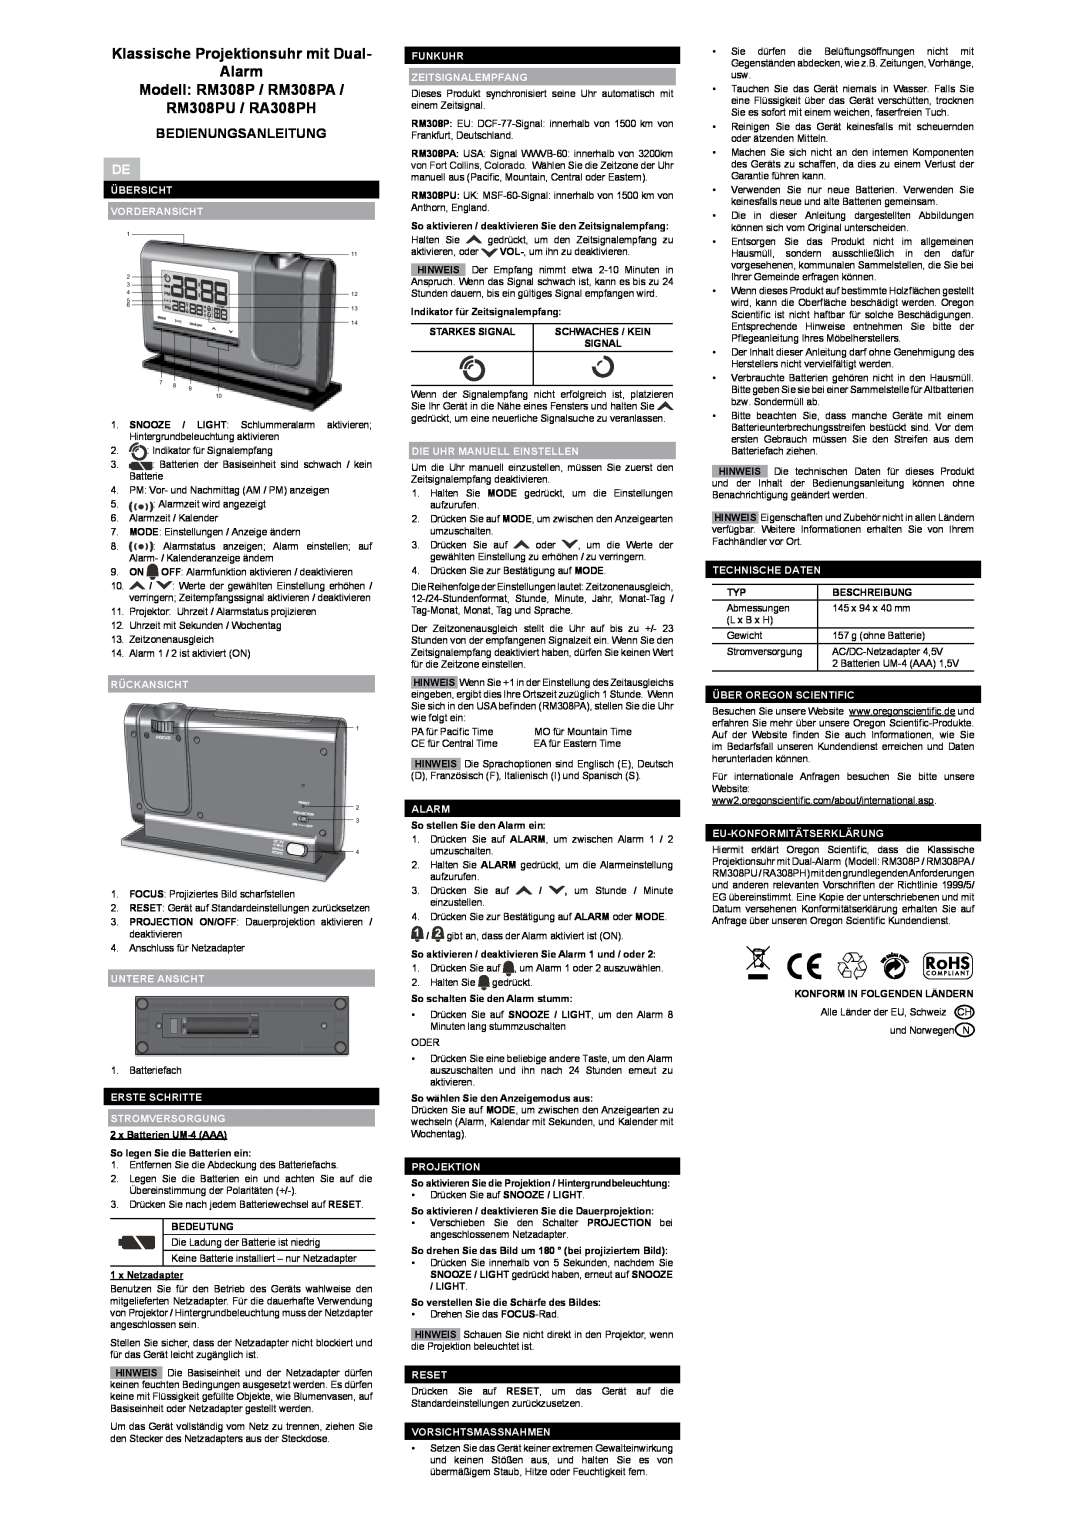 Oregon Scientific RM308PU Klassische Projektionsuhr mit Dual Alarm Modell RM308P / RM308PA, Bedienungsanleitung 